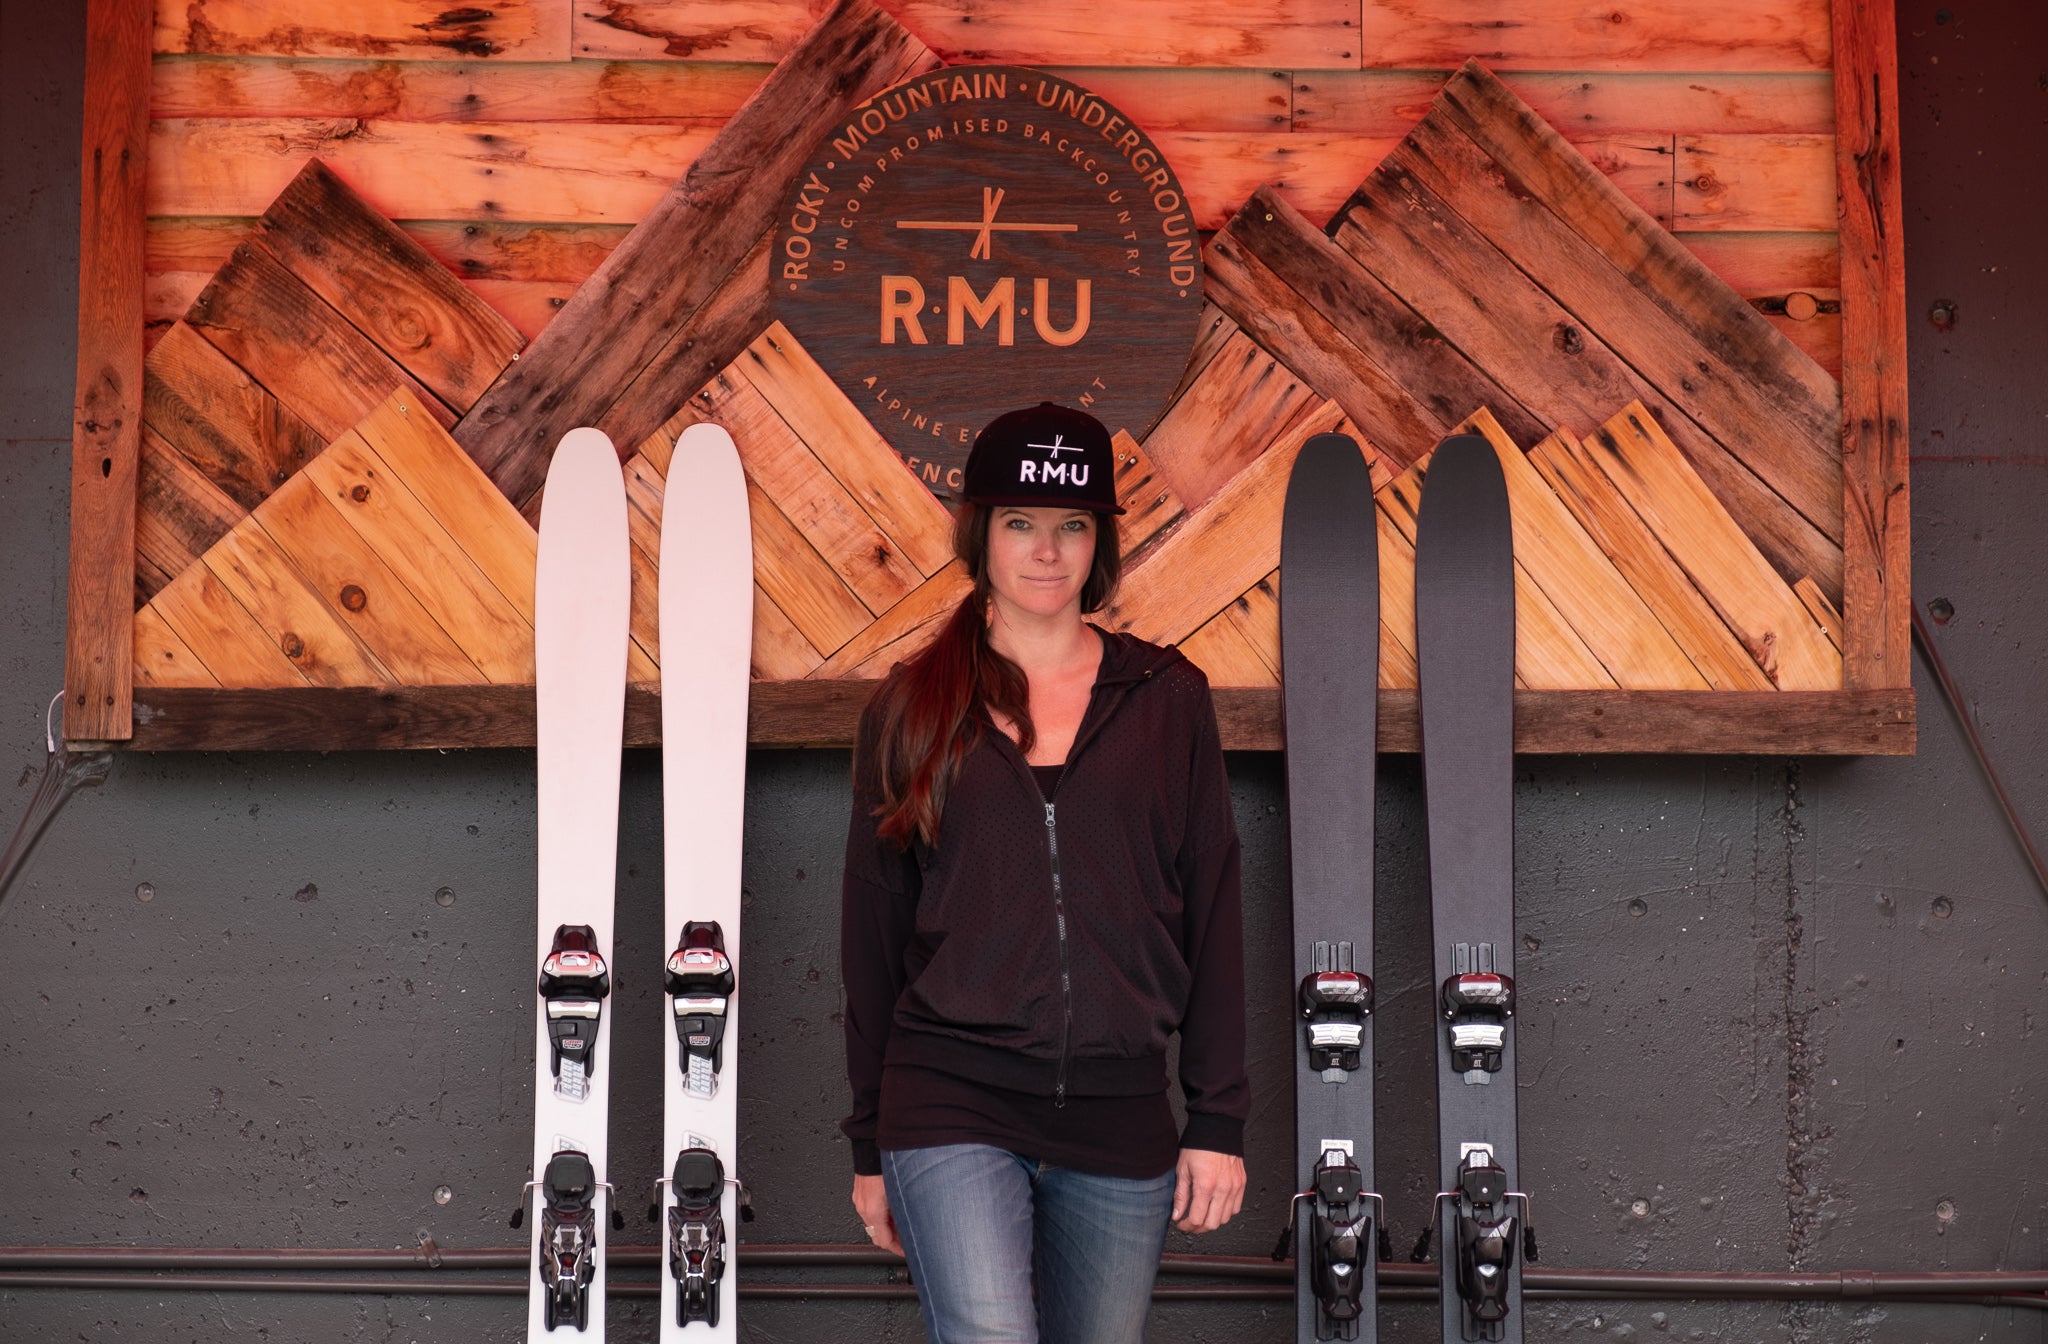 Keri Herman -- From Olympic Athlete to Ski Designer